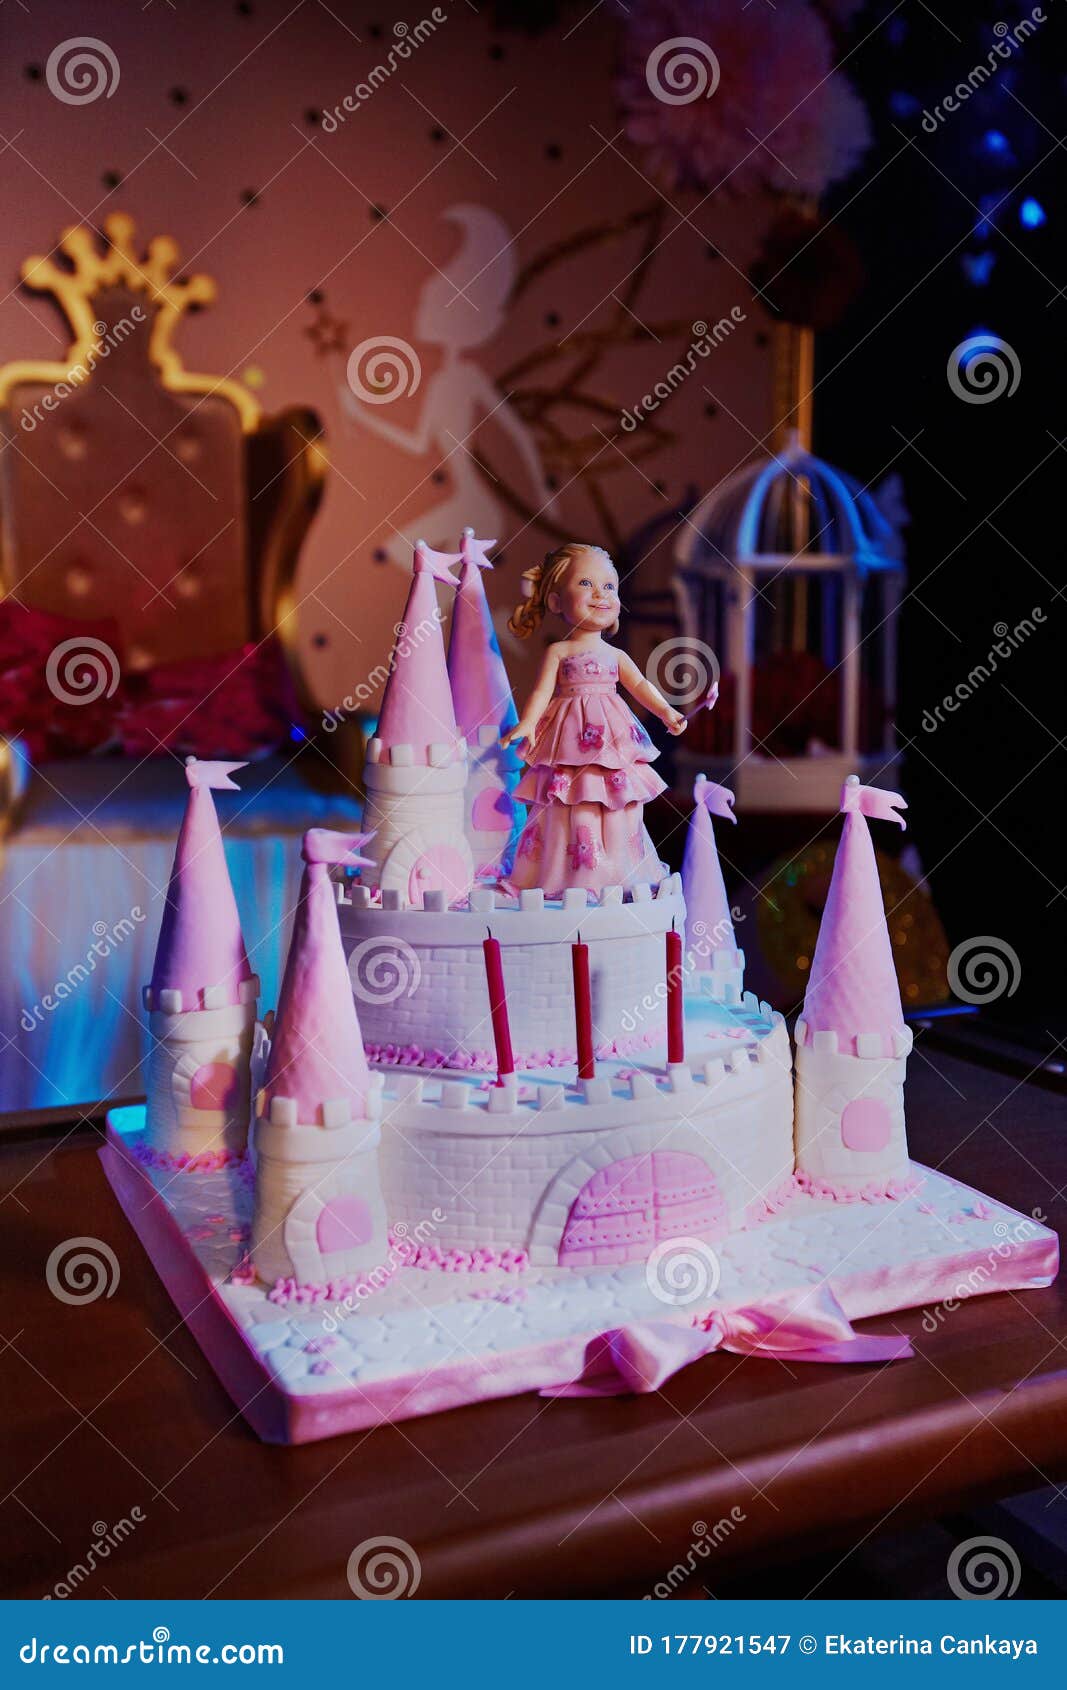 Amazing Girl Birthday Princess Cake in Castle Shape Stock Image ...